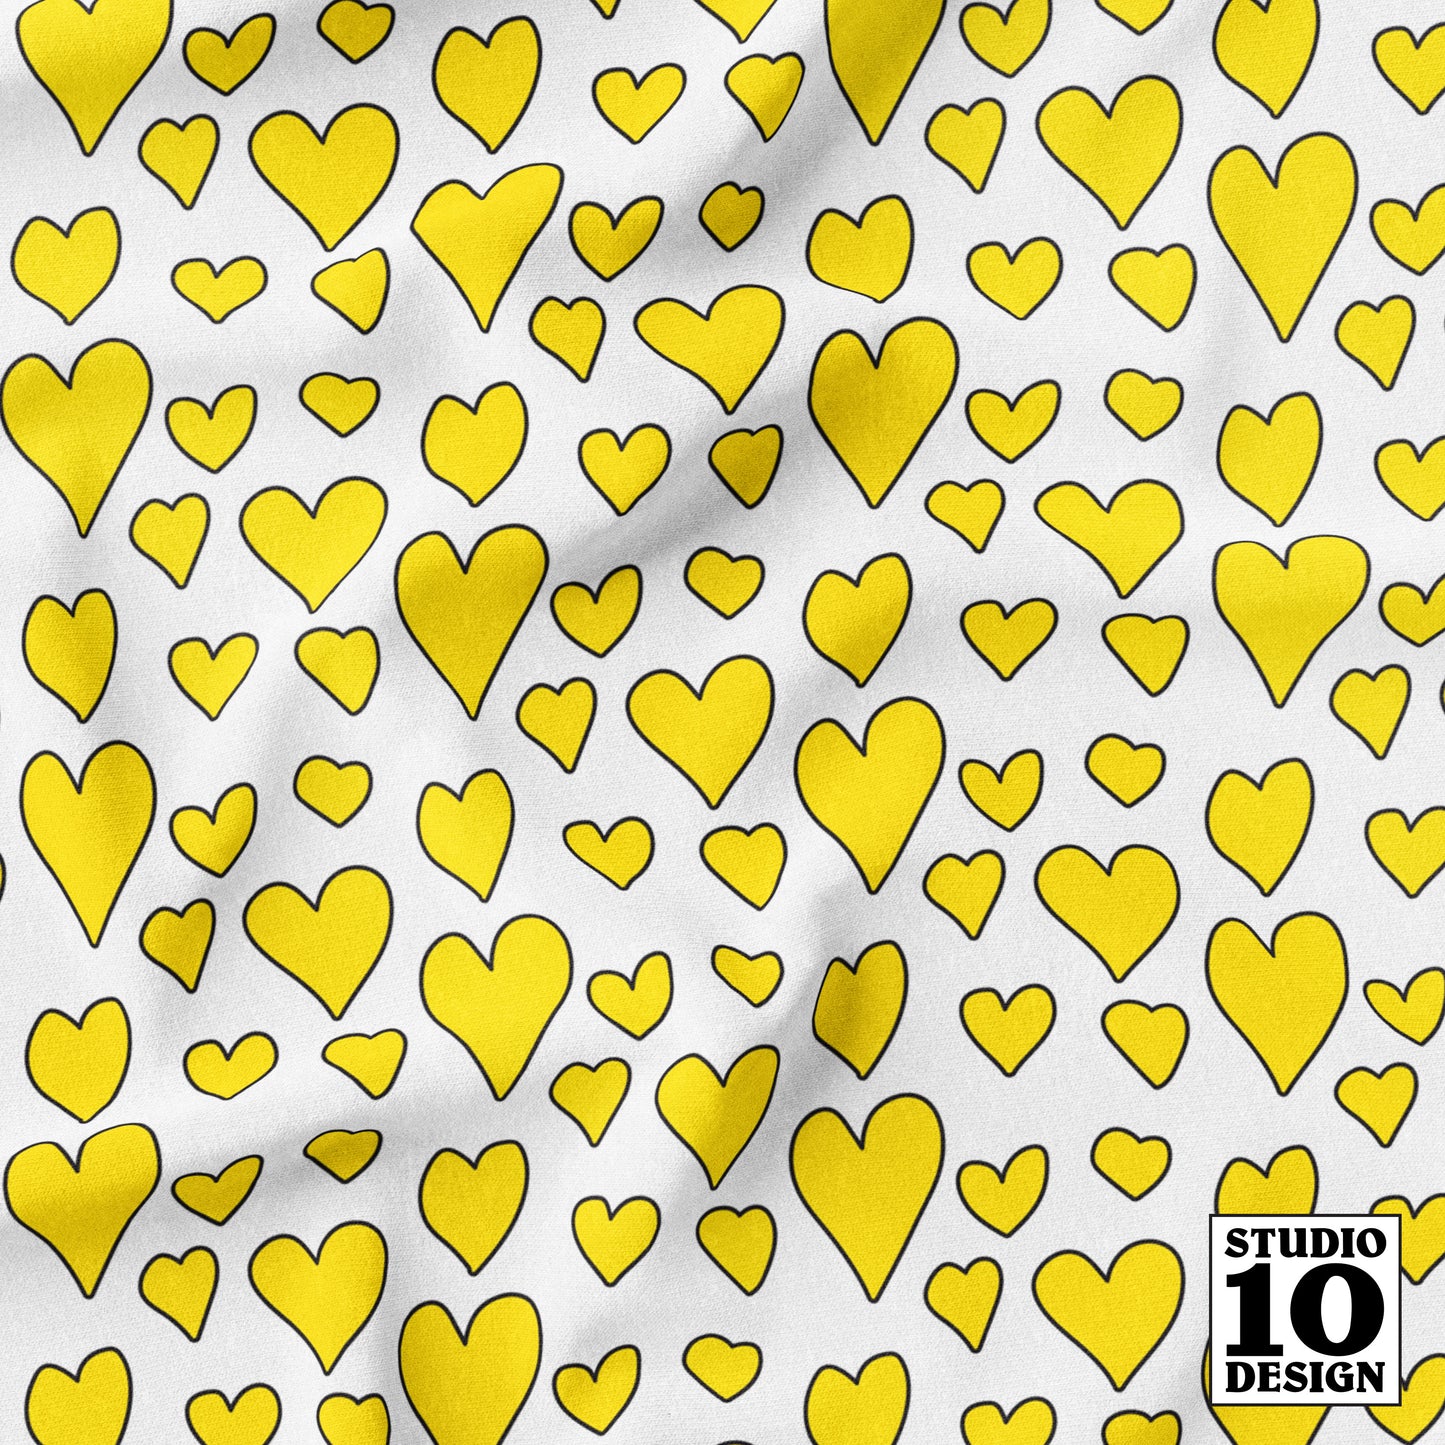 Rainbow Hearts Yellow+White Printed Fabric by Studio Ten Design